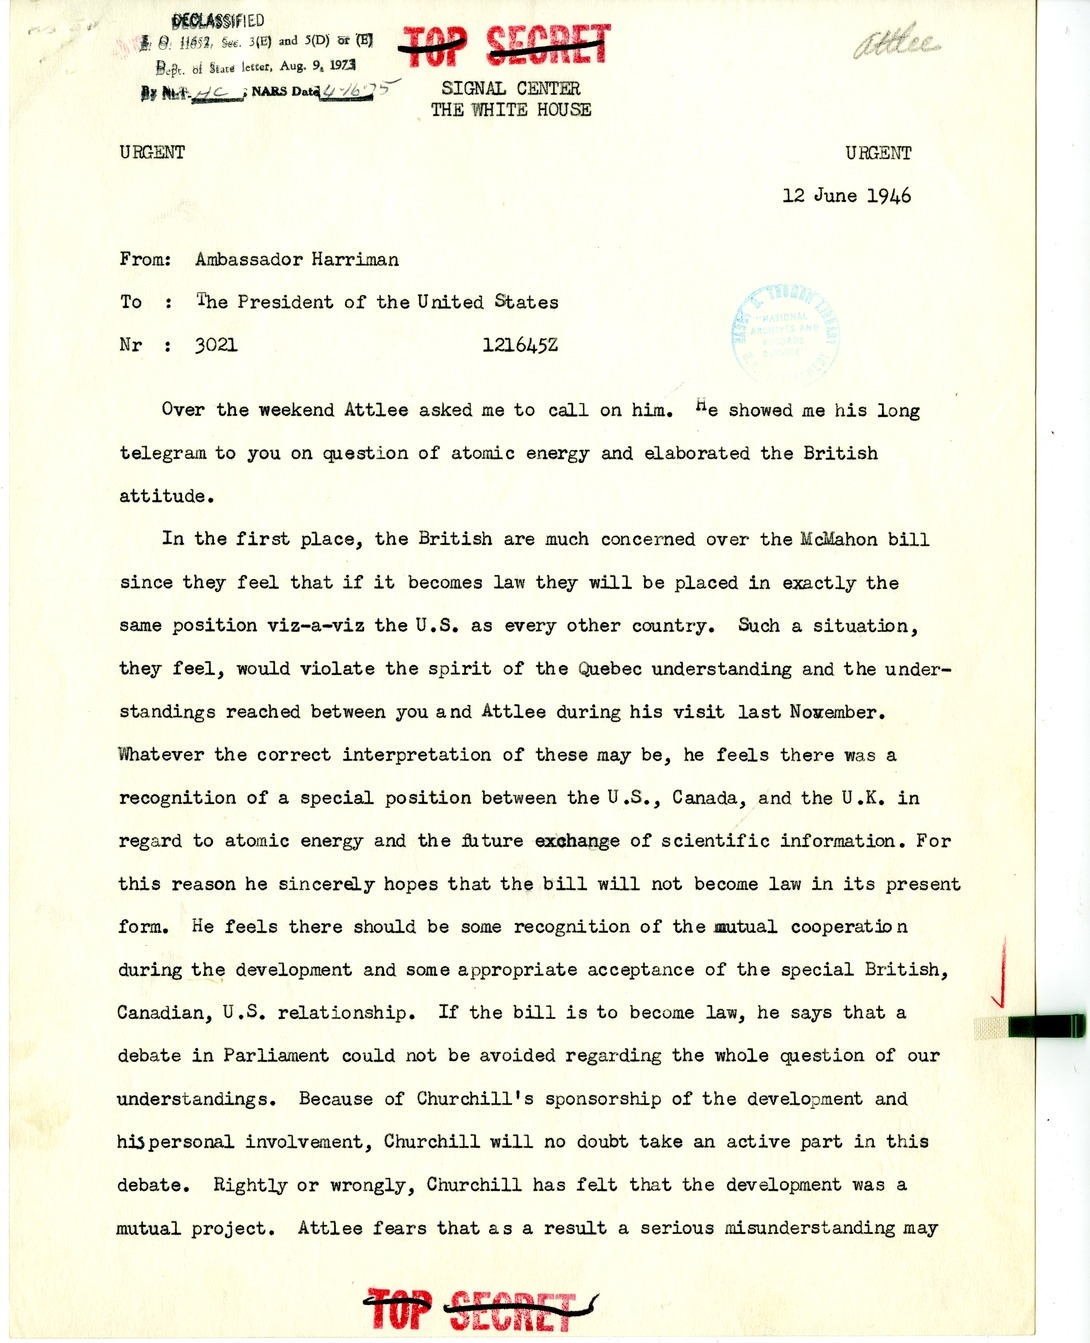 Memorandum from Ambassador Averell Harriman to President Harry S. Truman